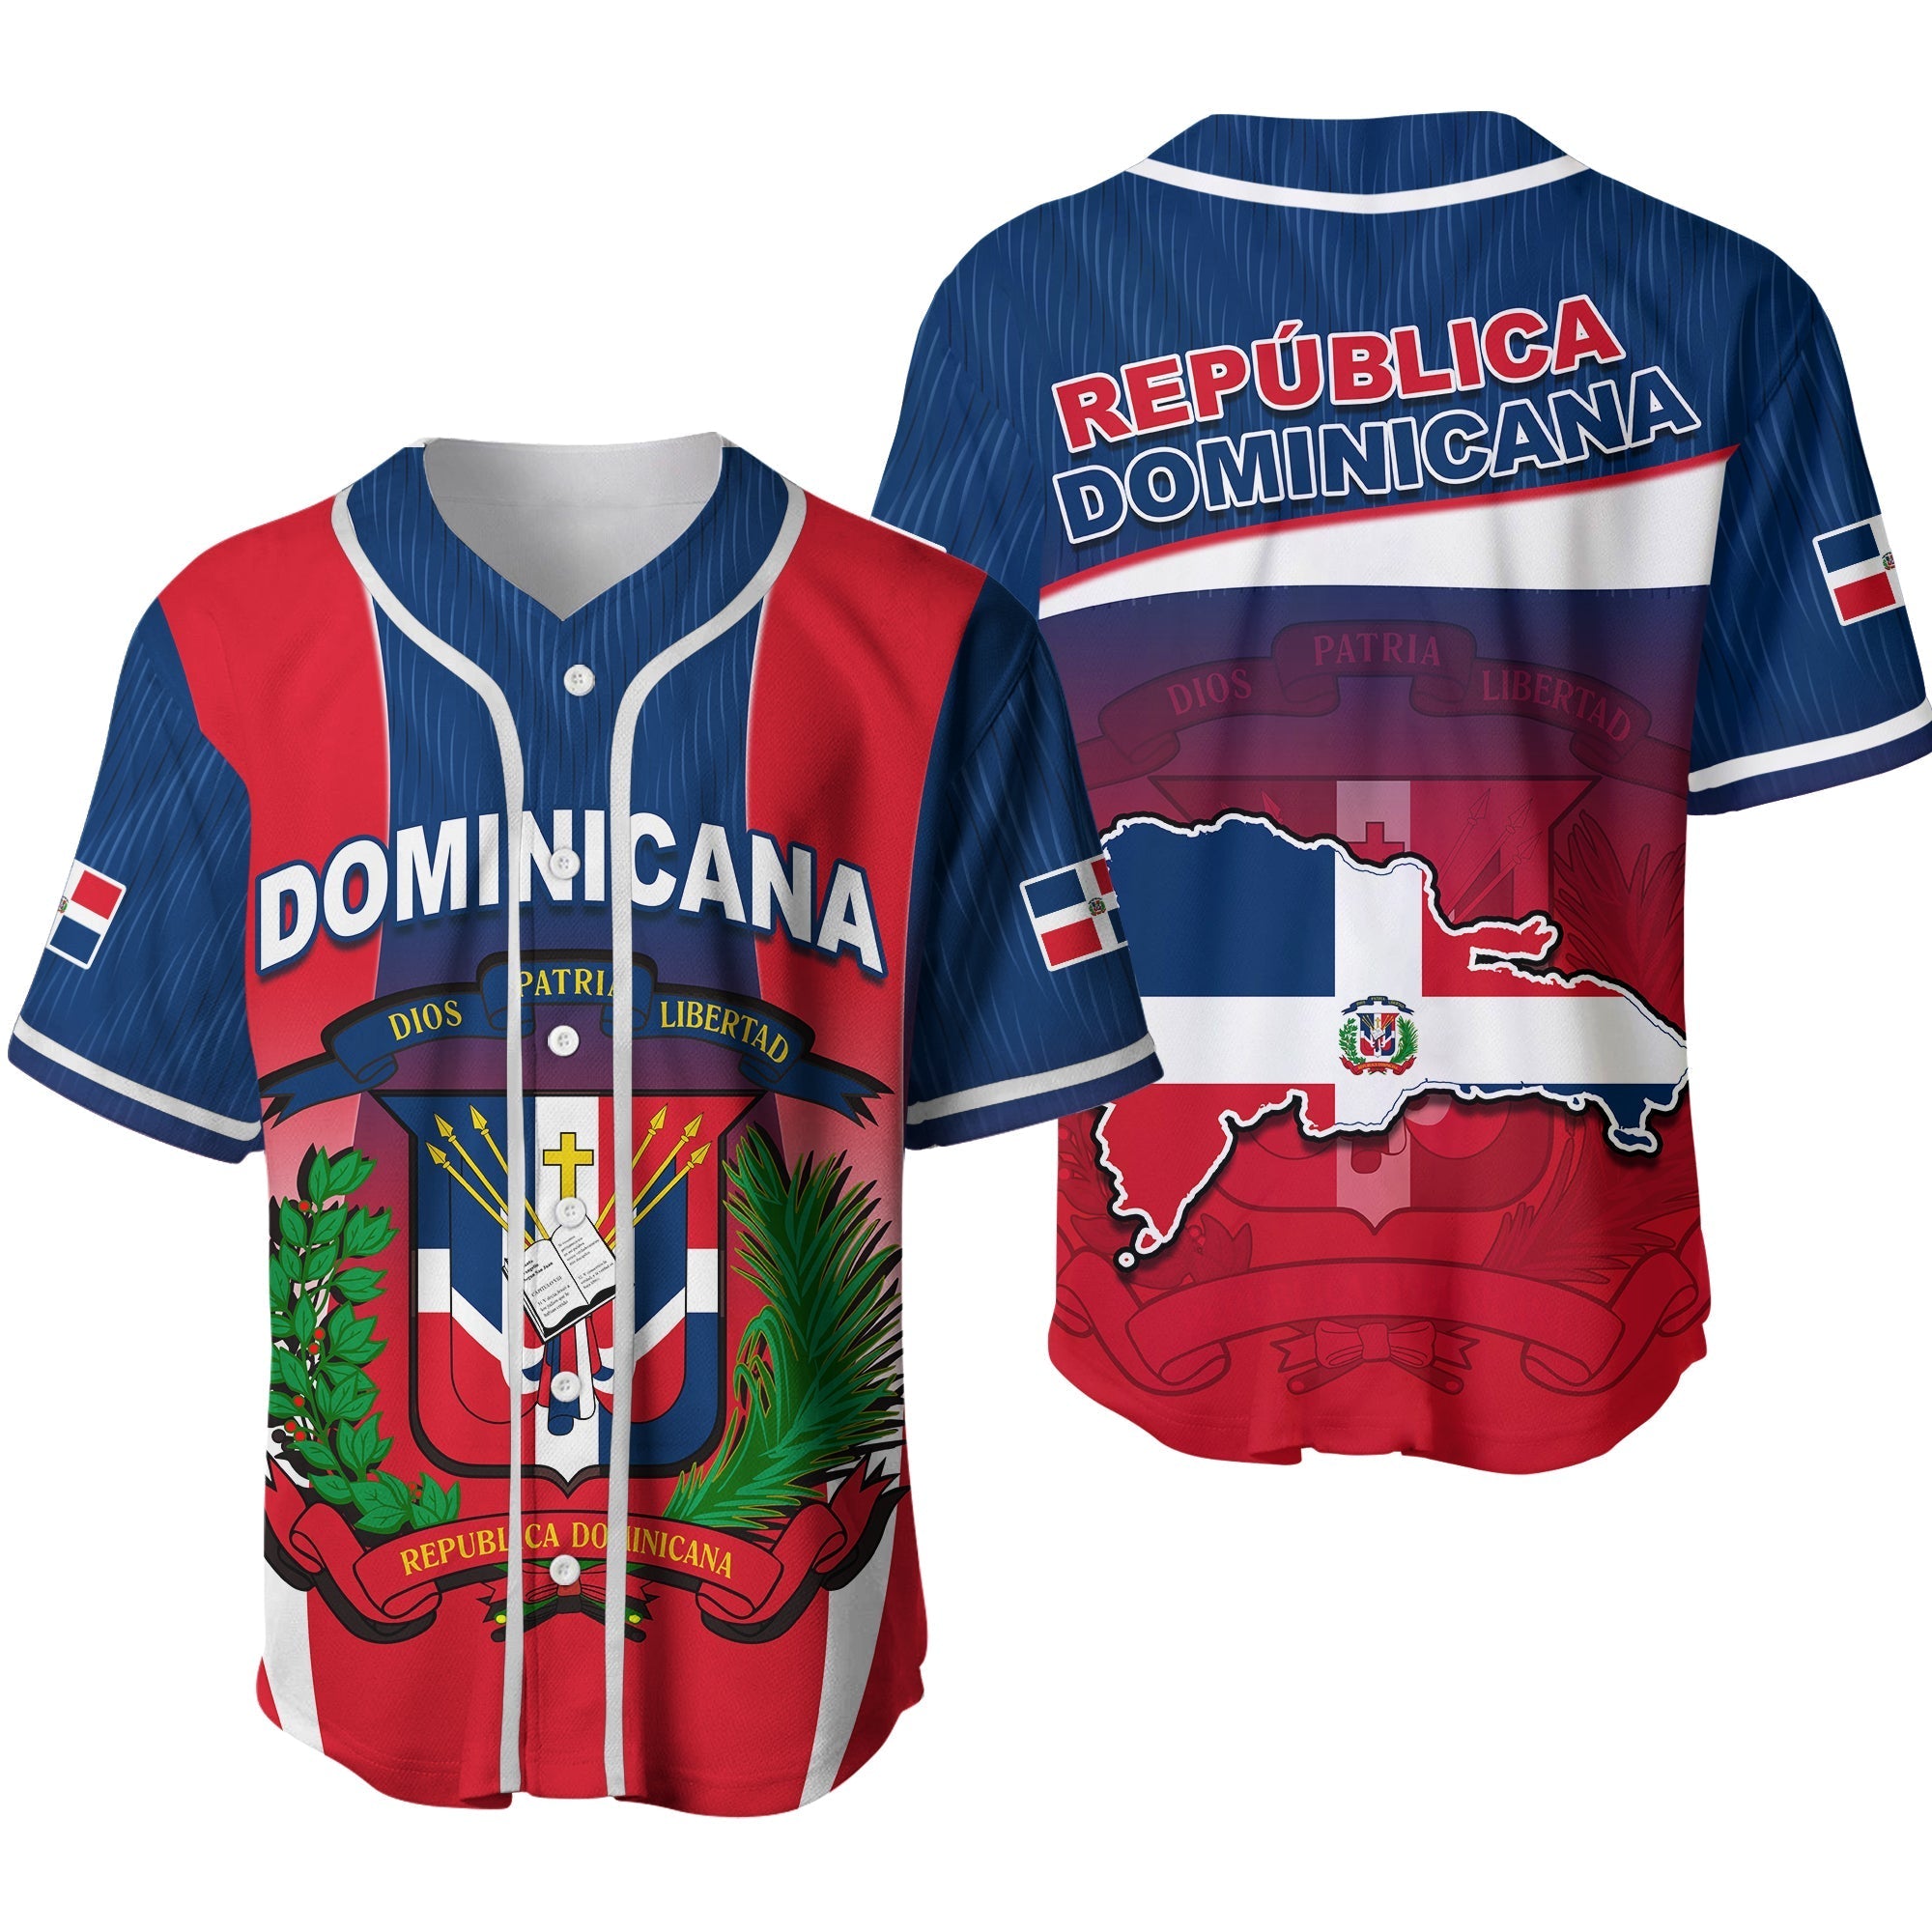 dominican-republic-baseball-jersey-dominicana-style-sporty-ver02